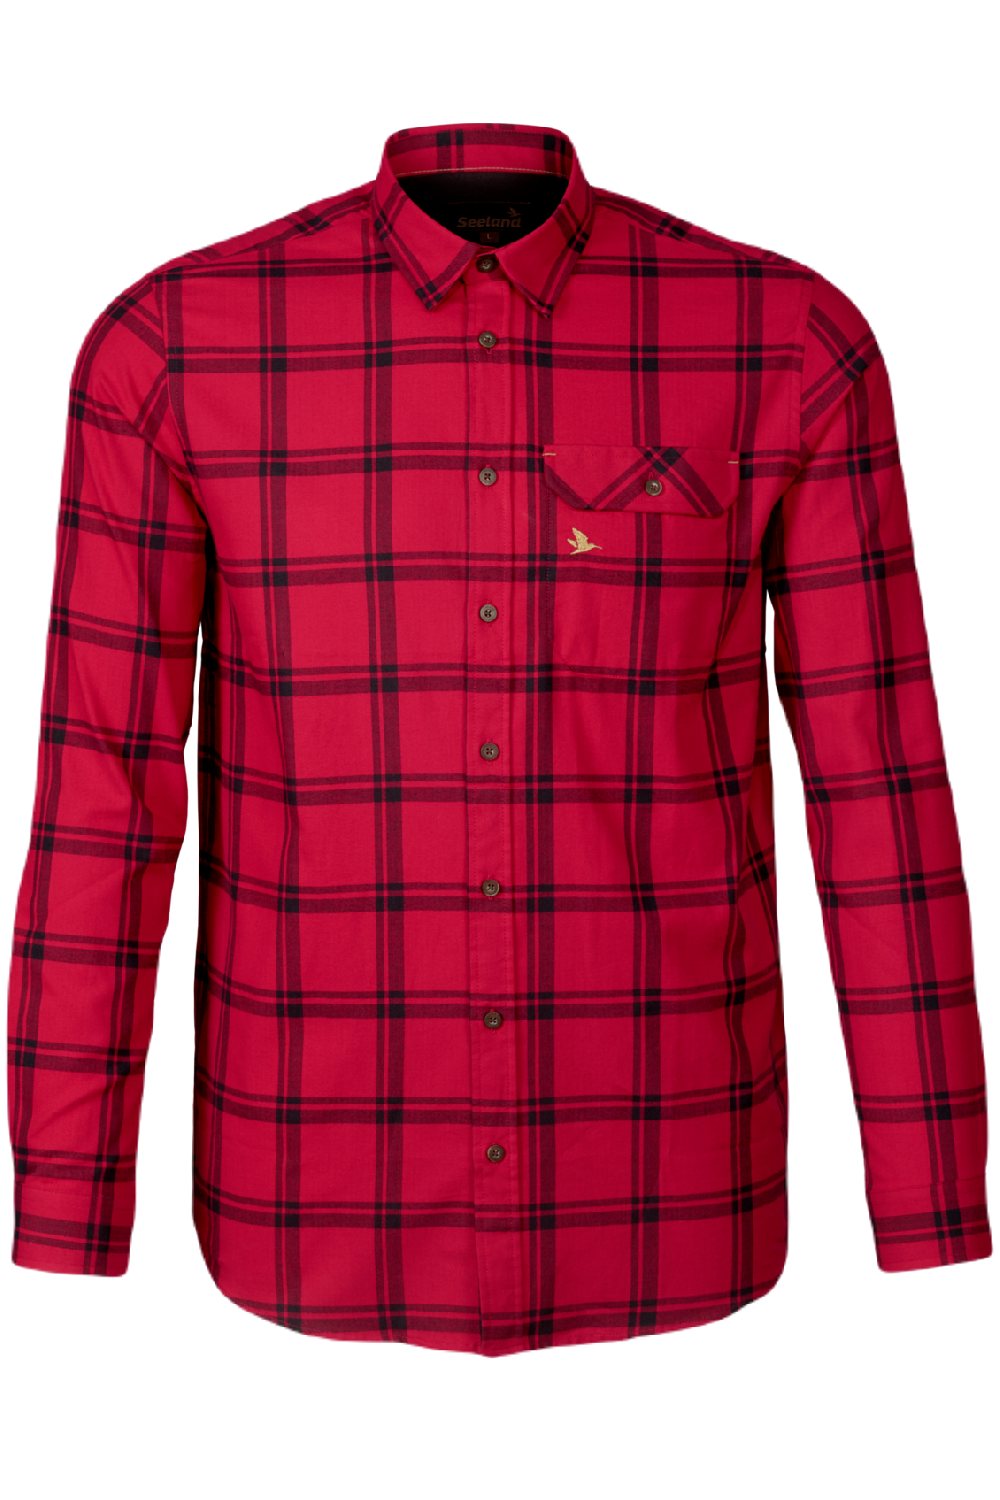 Seeland Highseat Shirt in Hunter Red 